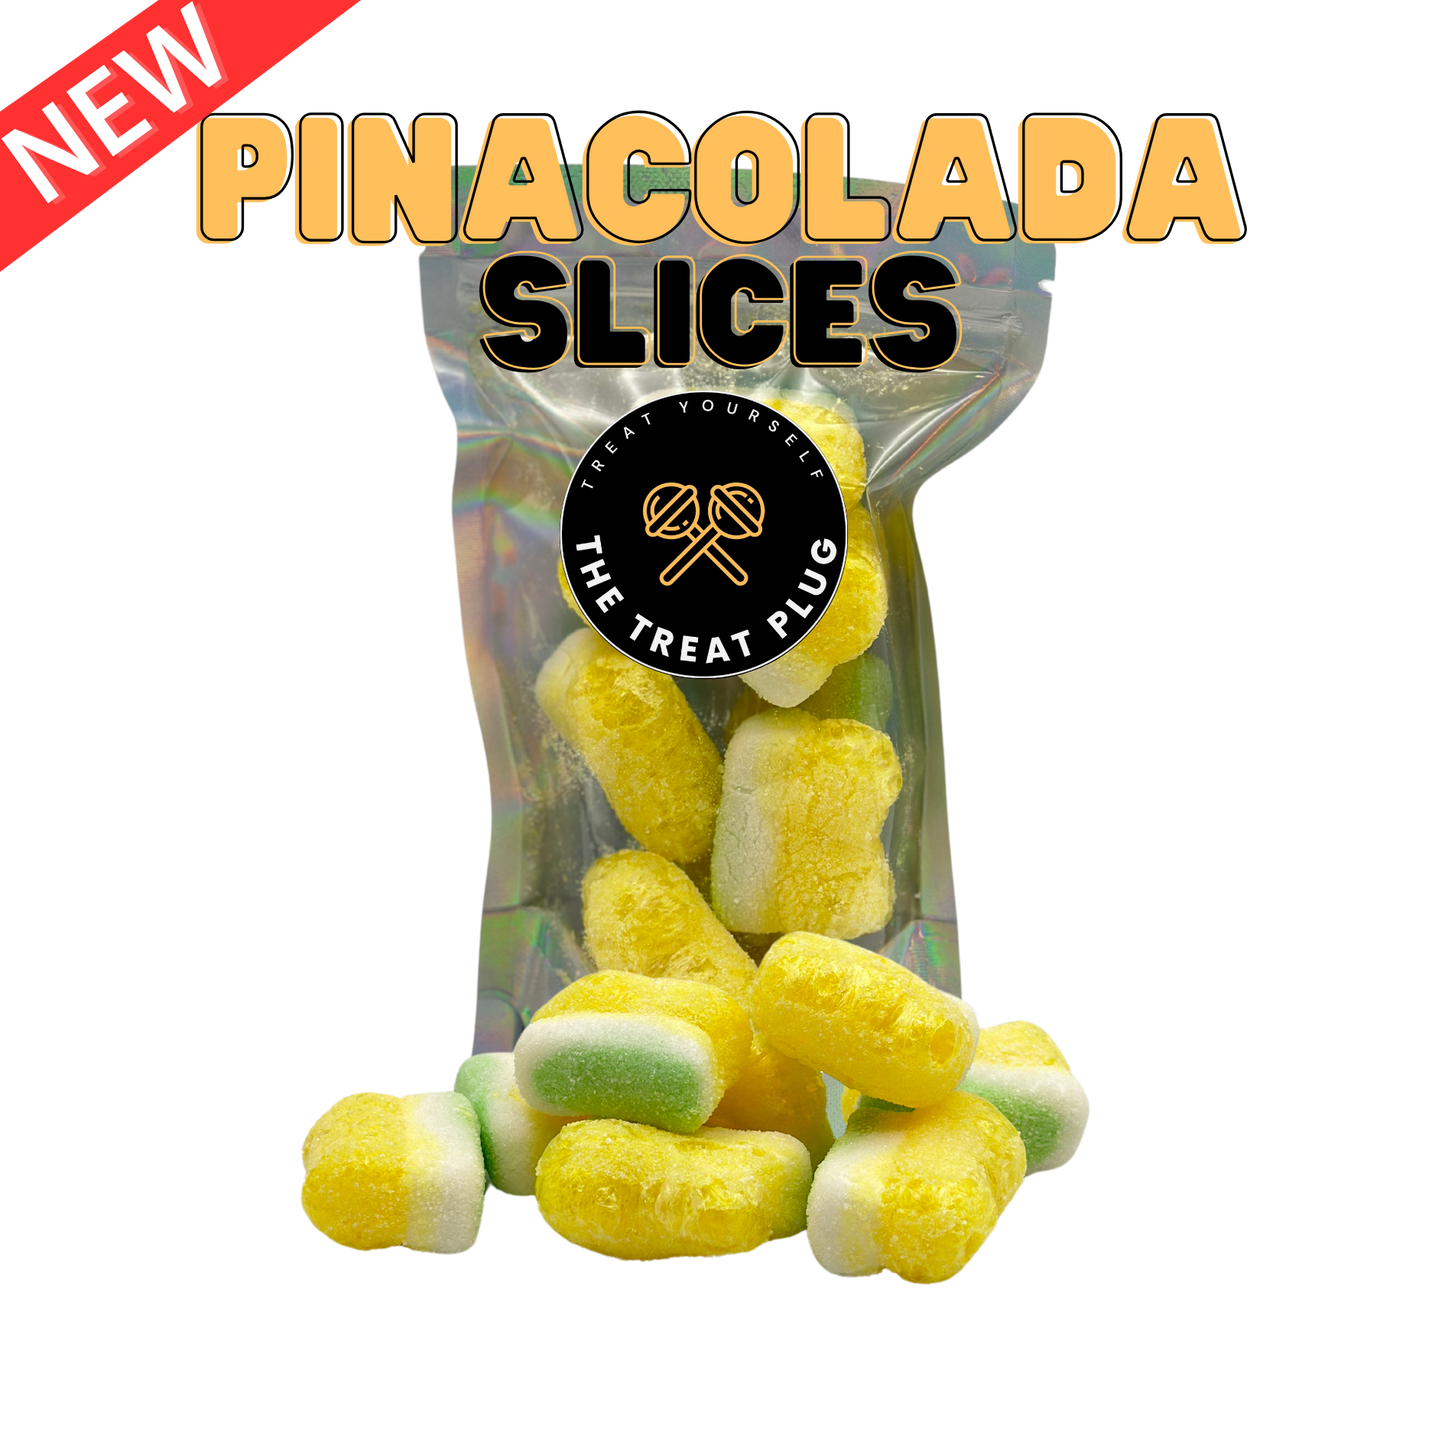 Freeze Dried Pinacolada Slices